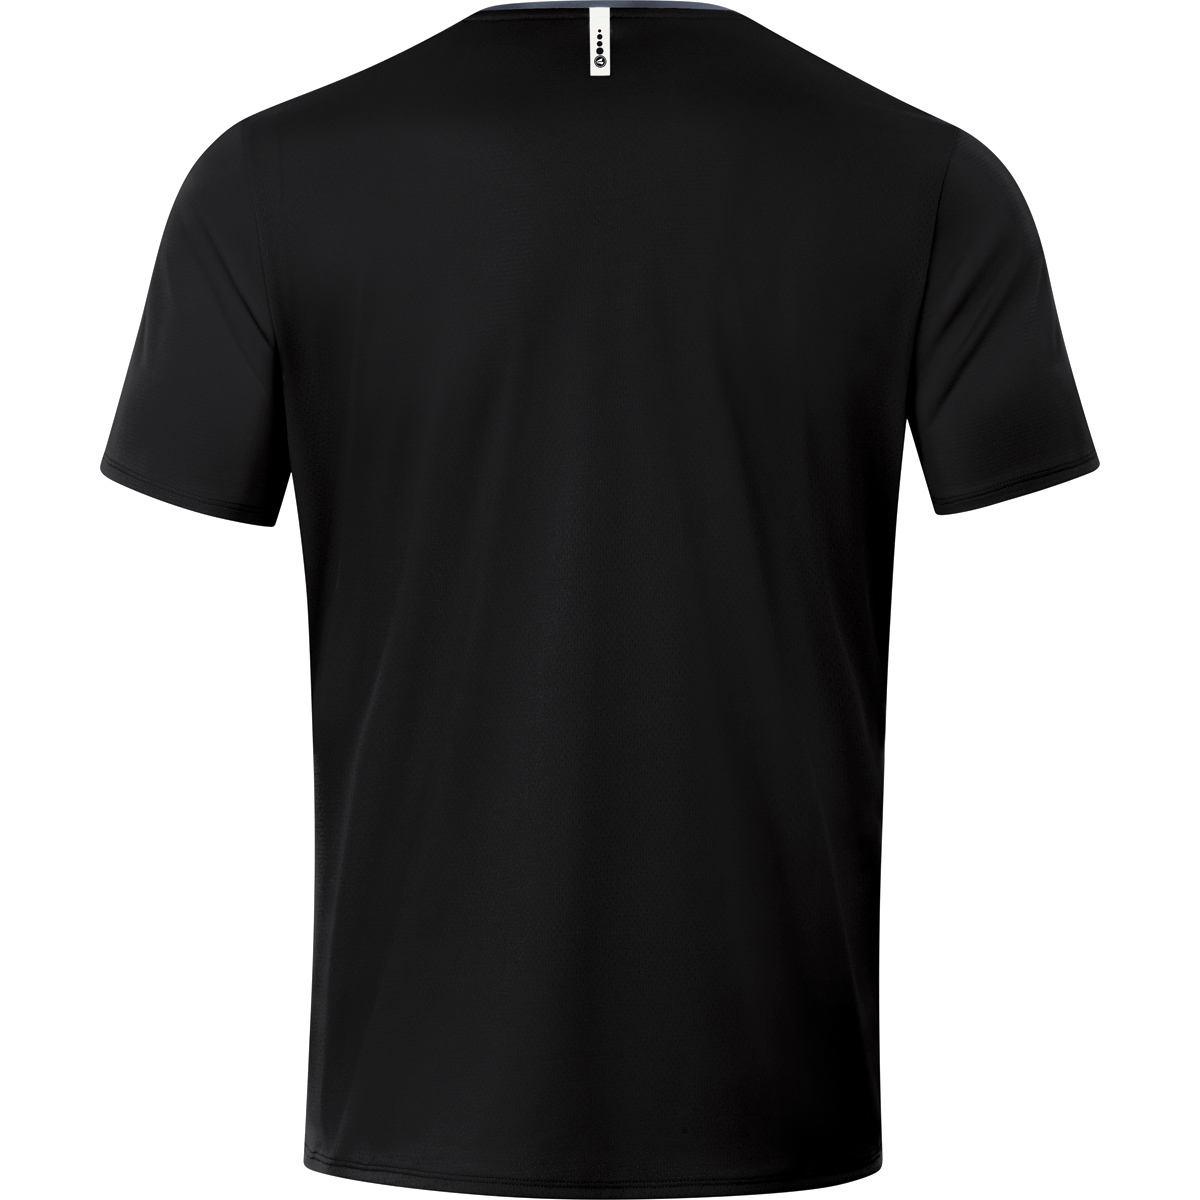 JAKO T-Shirt Champ XXL, Herren, 6120 Gr. schwarz/anthrazit, 2.0